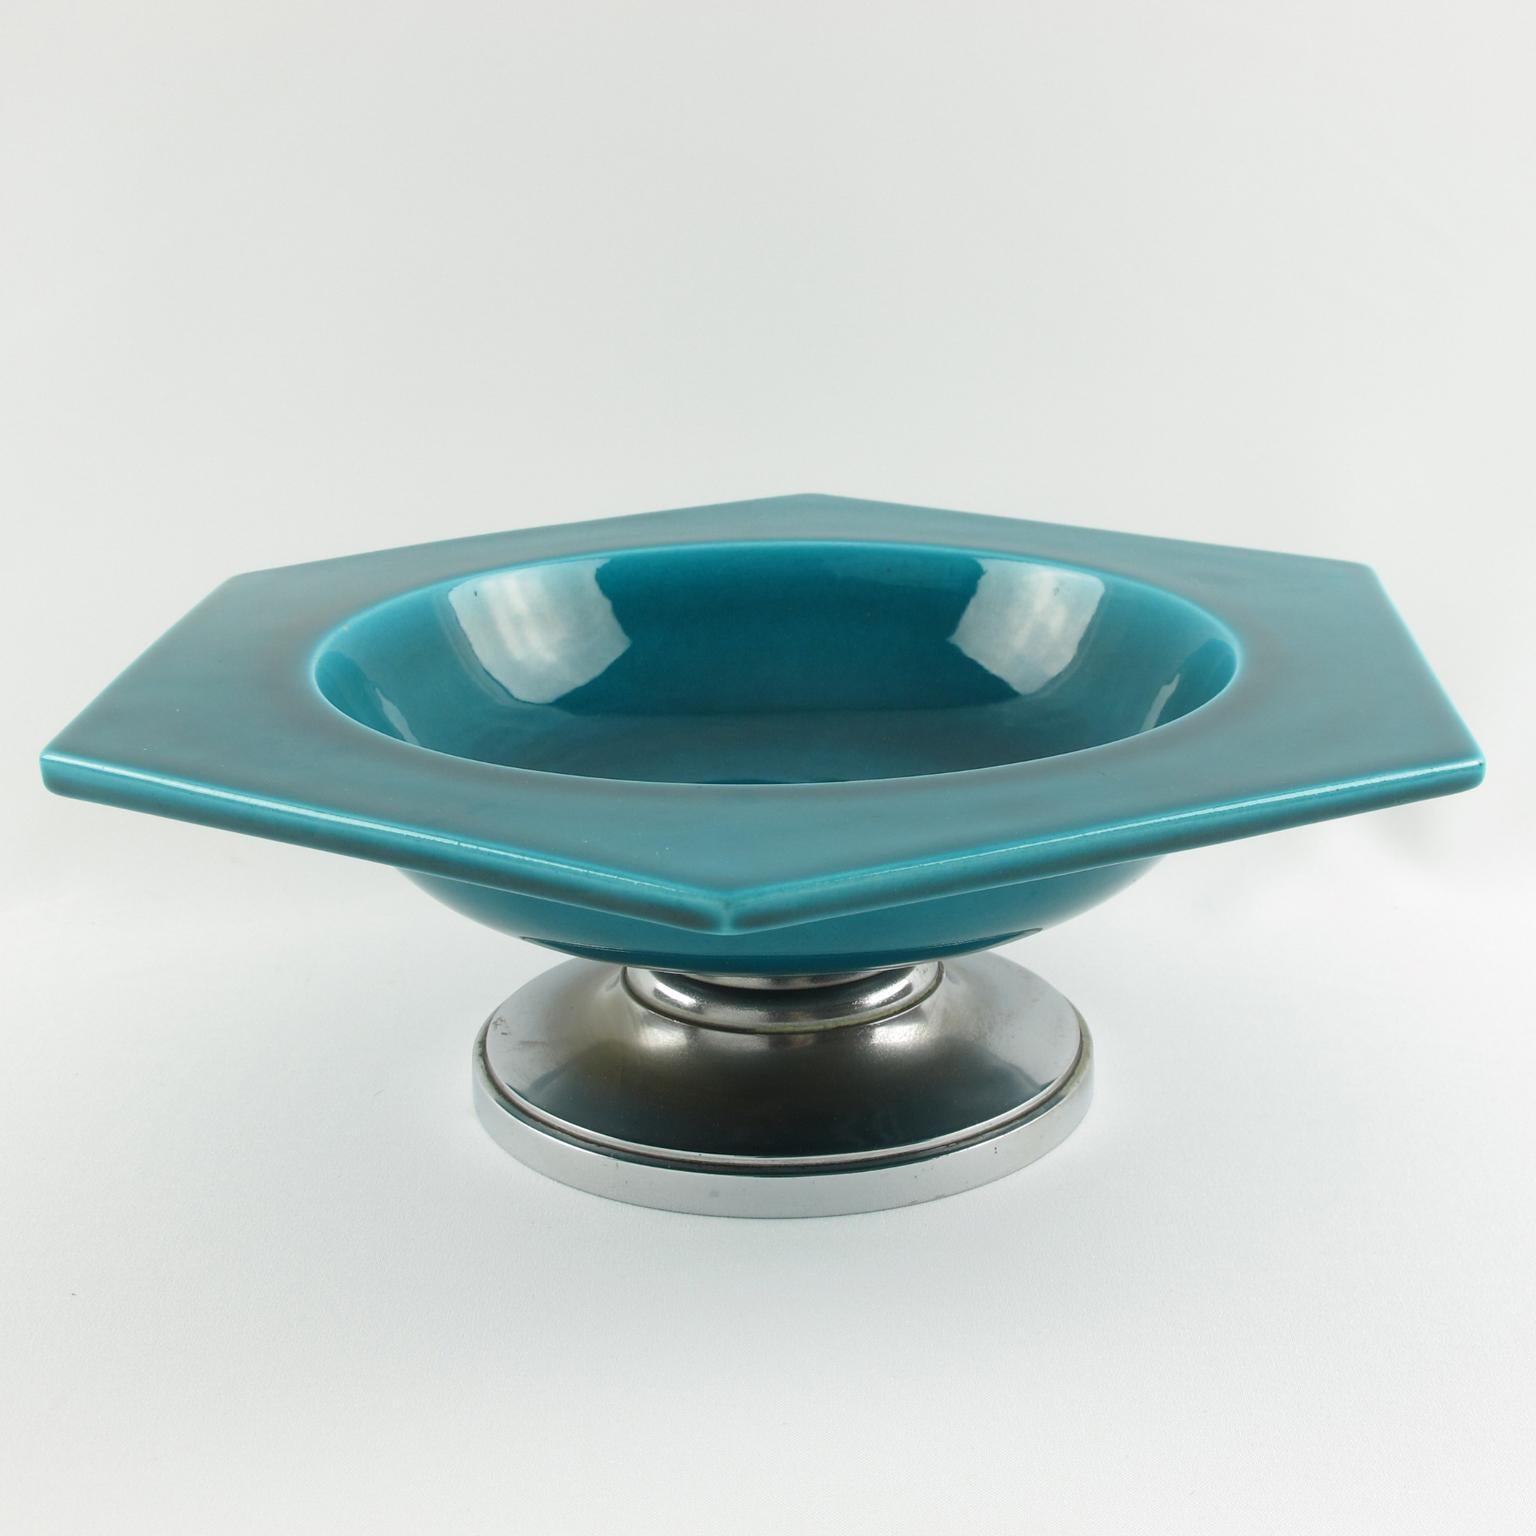 Paul Milet for Sevres Art Deco Bronze and Turquoise Ceramic Centerpiece Bowl 4